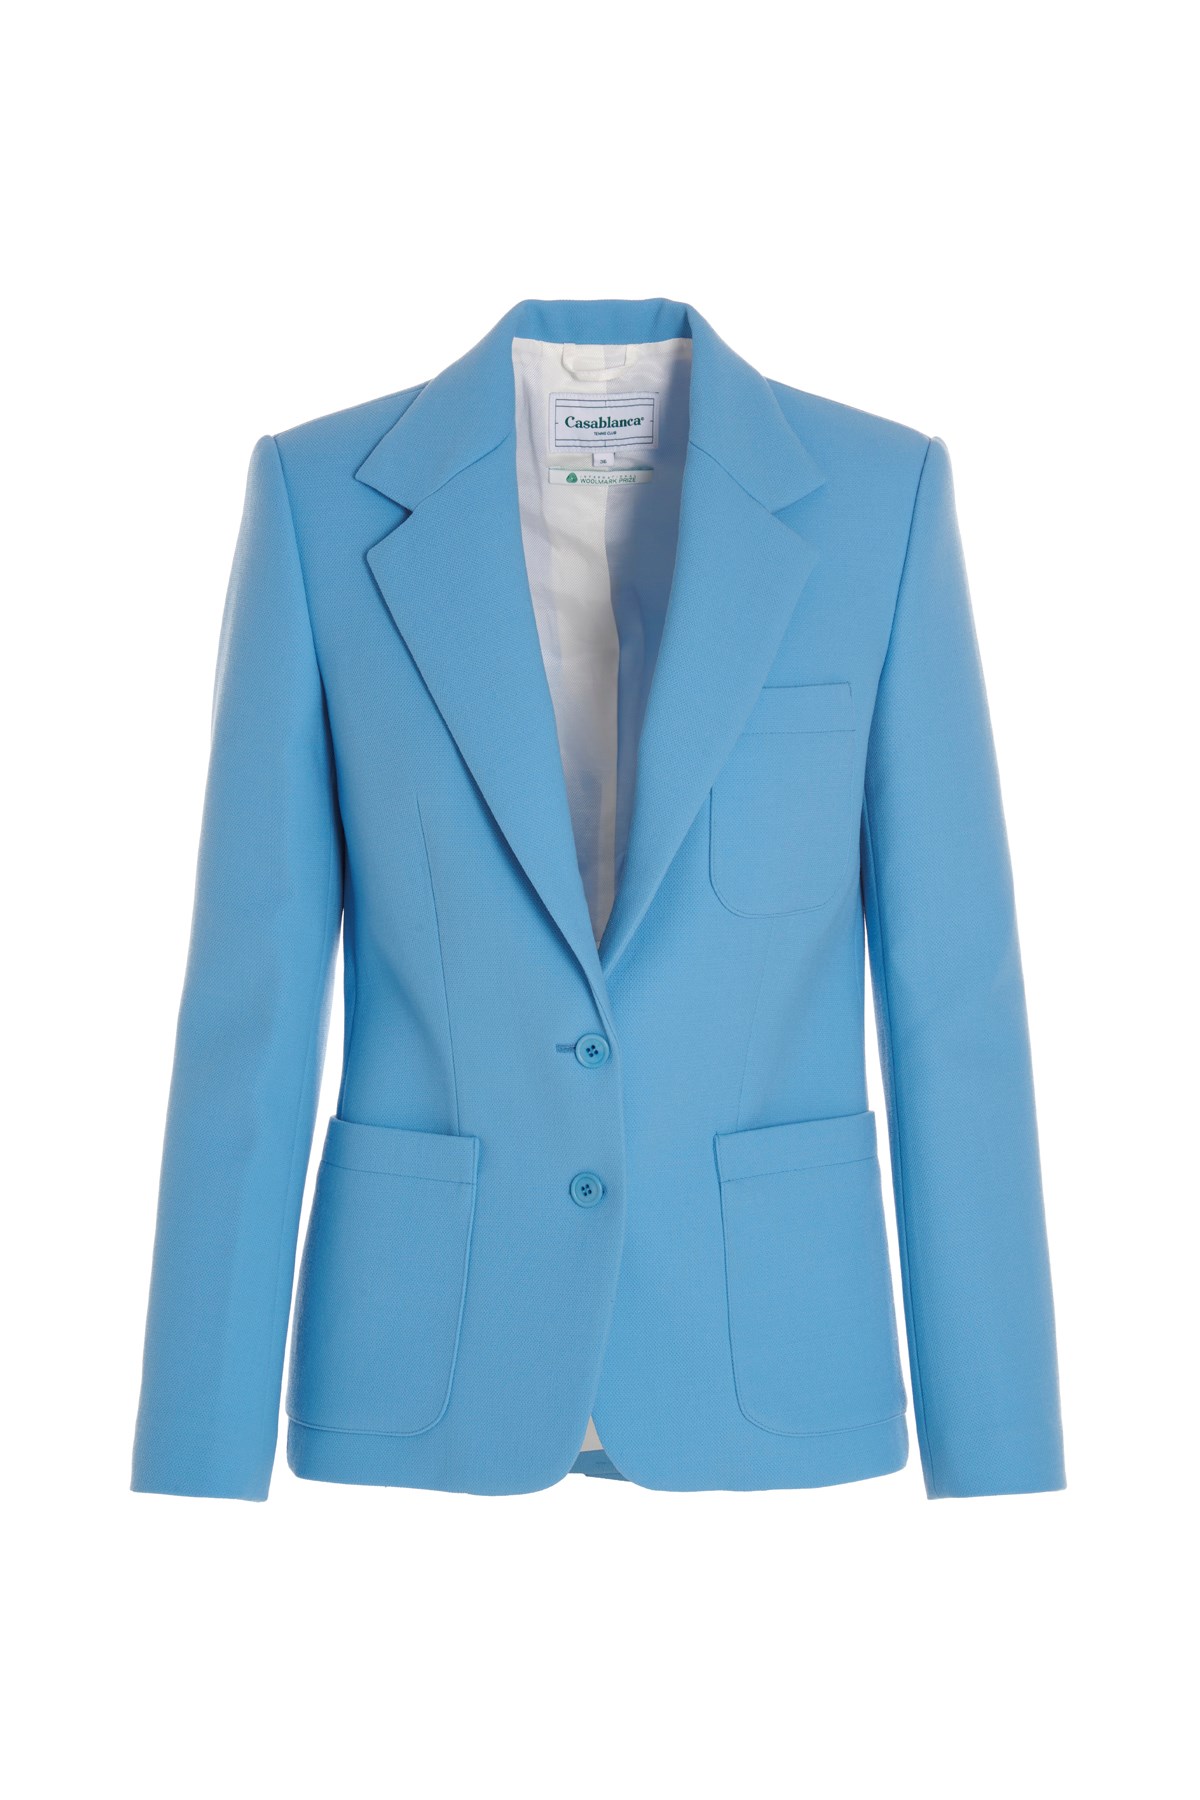 CASABLANCA 'Alaskan Blue’ Blazer Jacket